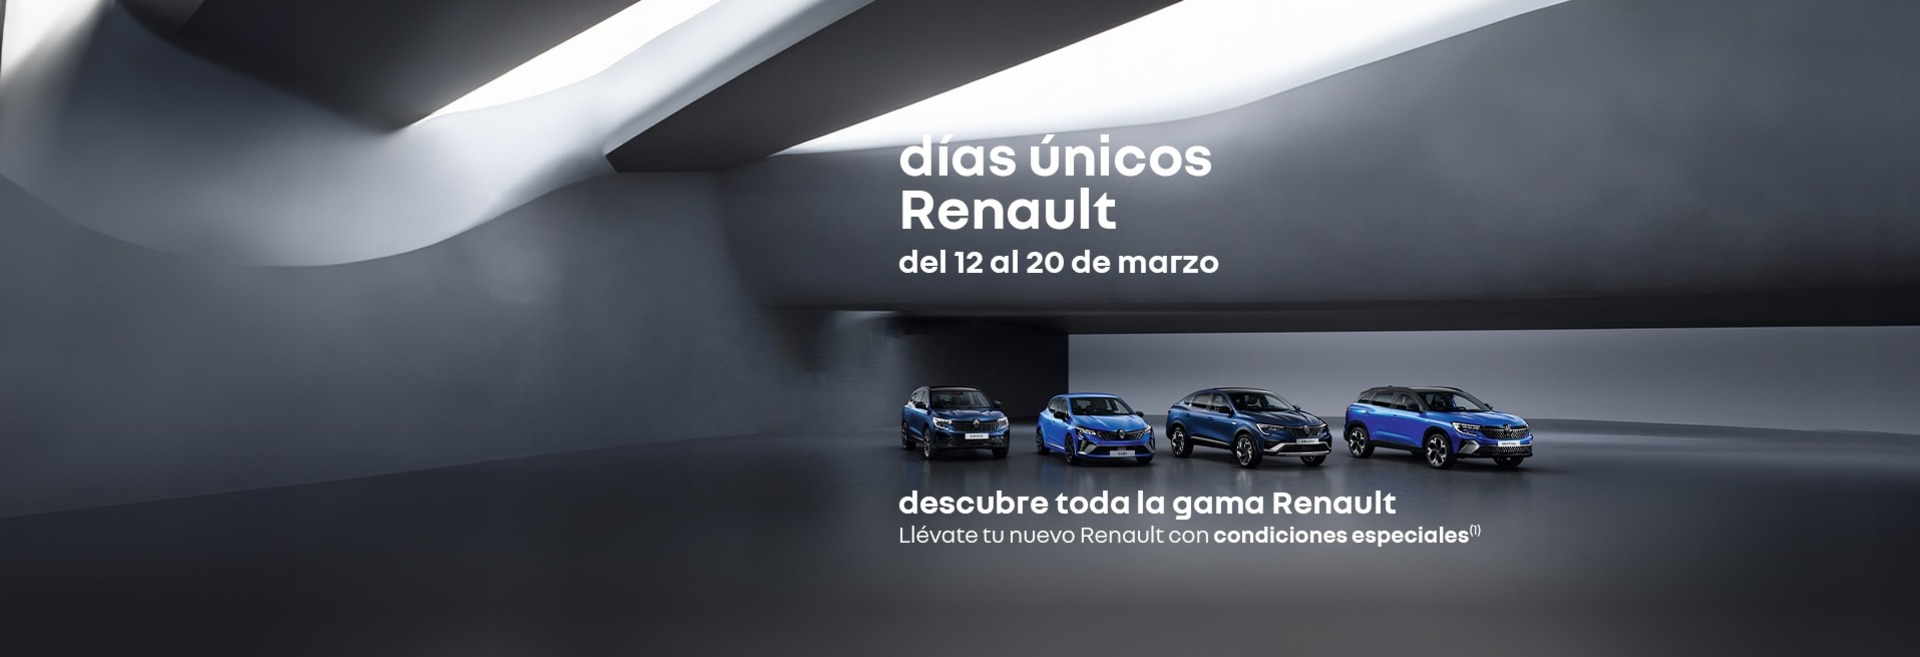 Días únicos Renault Gaursa